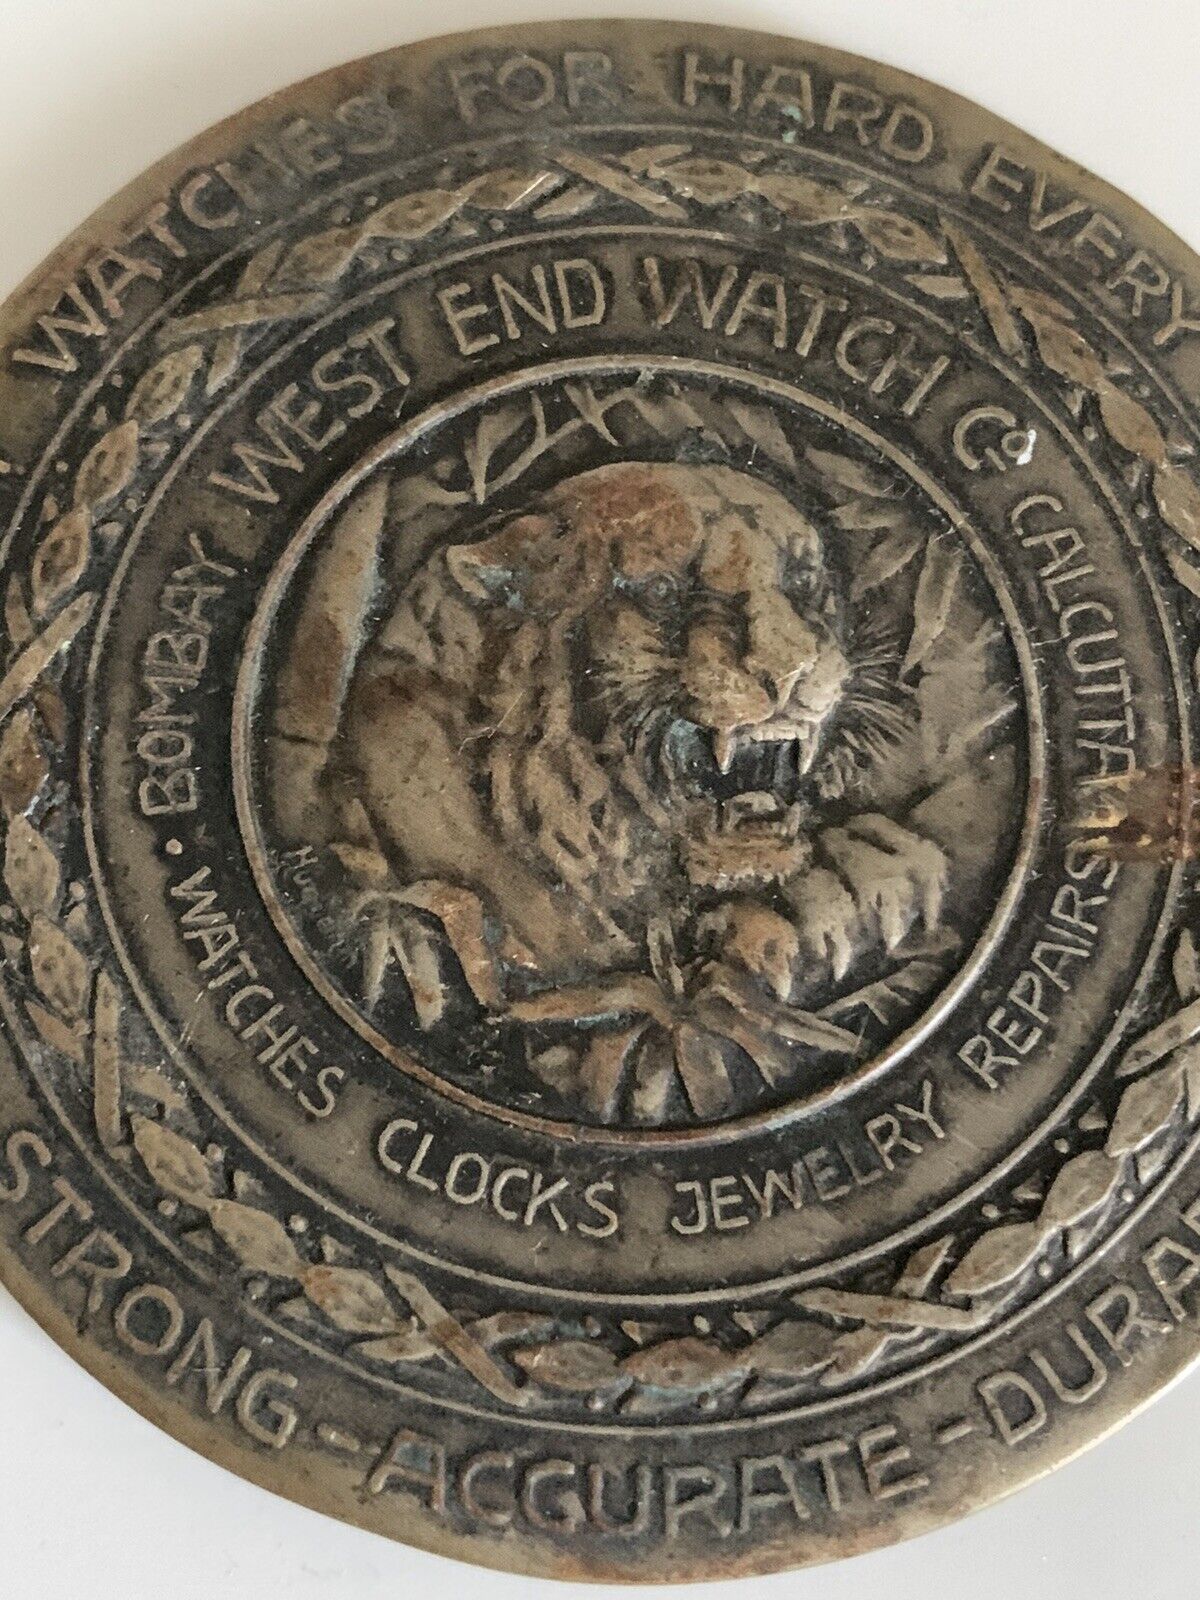 Rare West End Watch Company Calcutta Bombay Mirror